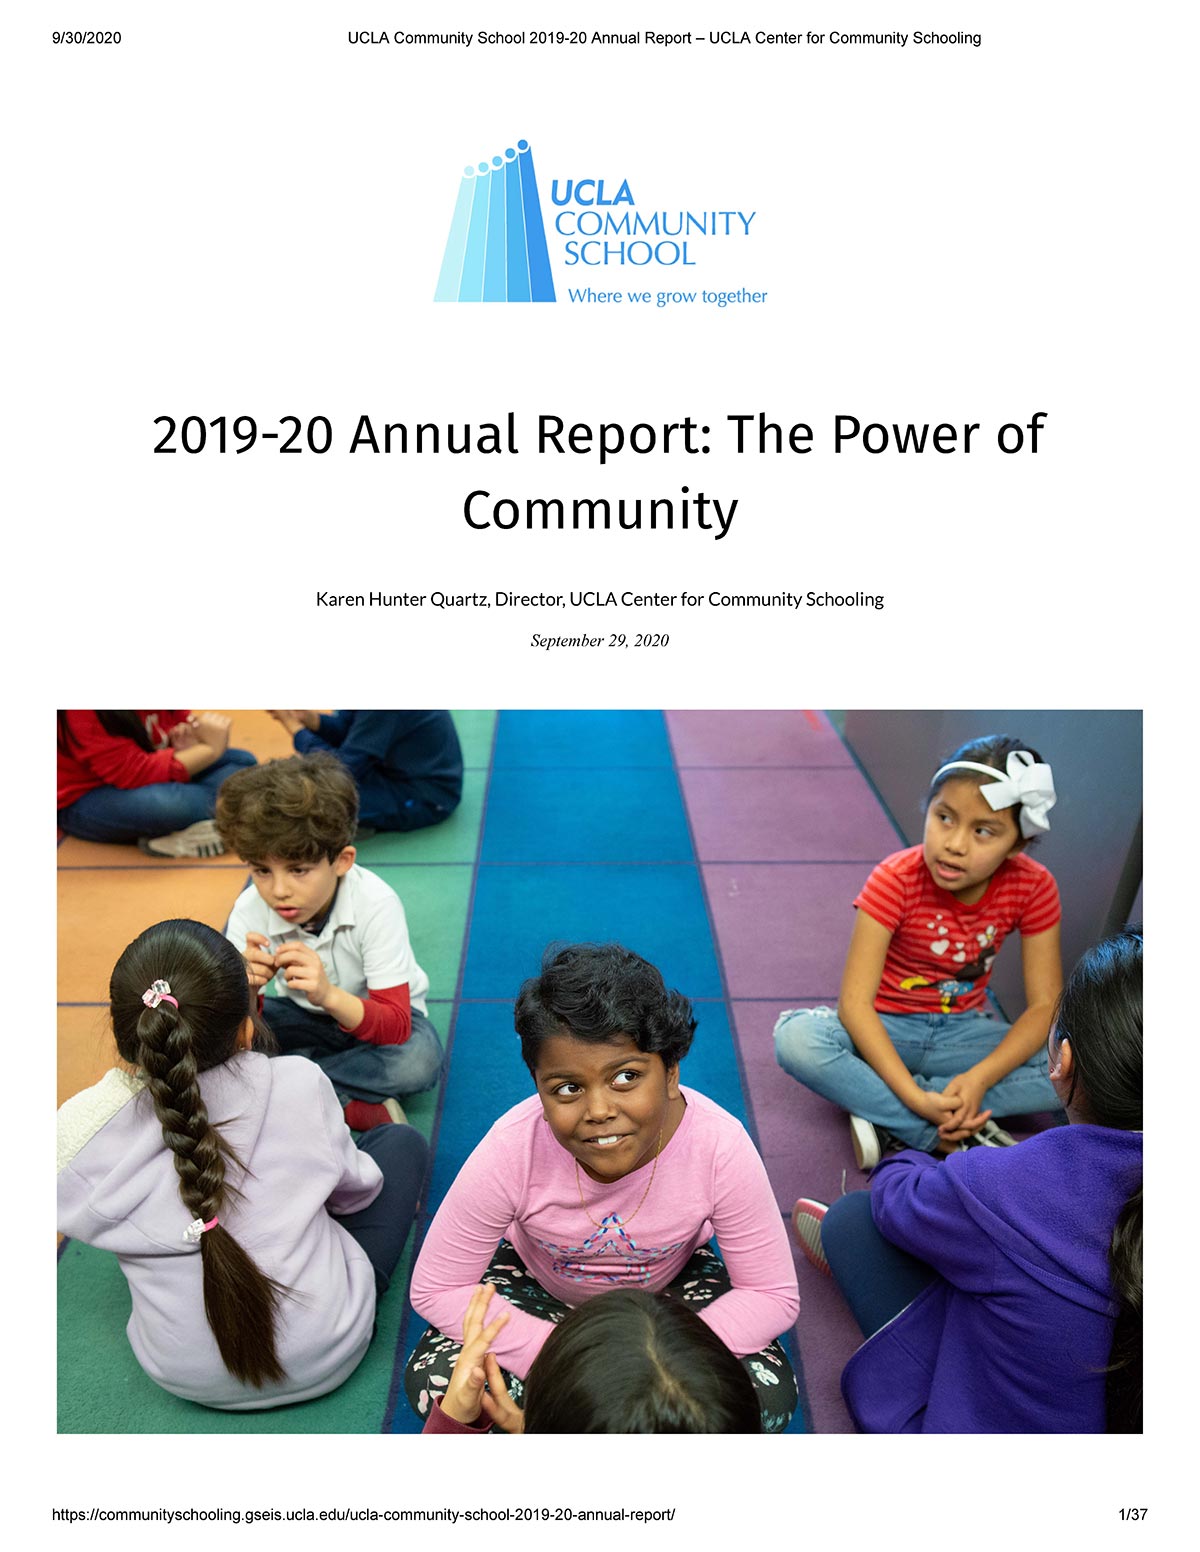 UCLA Community School 2019-20 Annual Report Cover